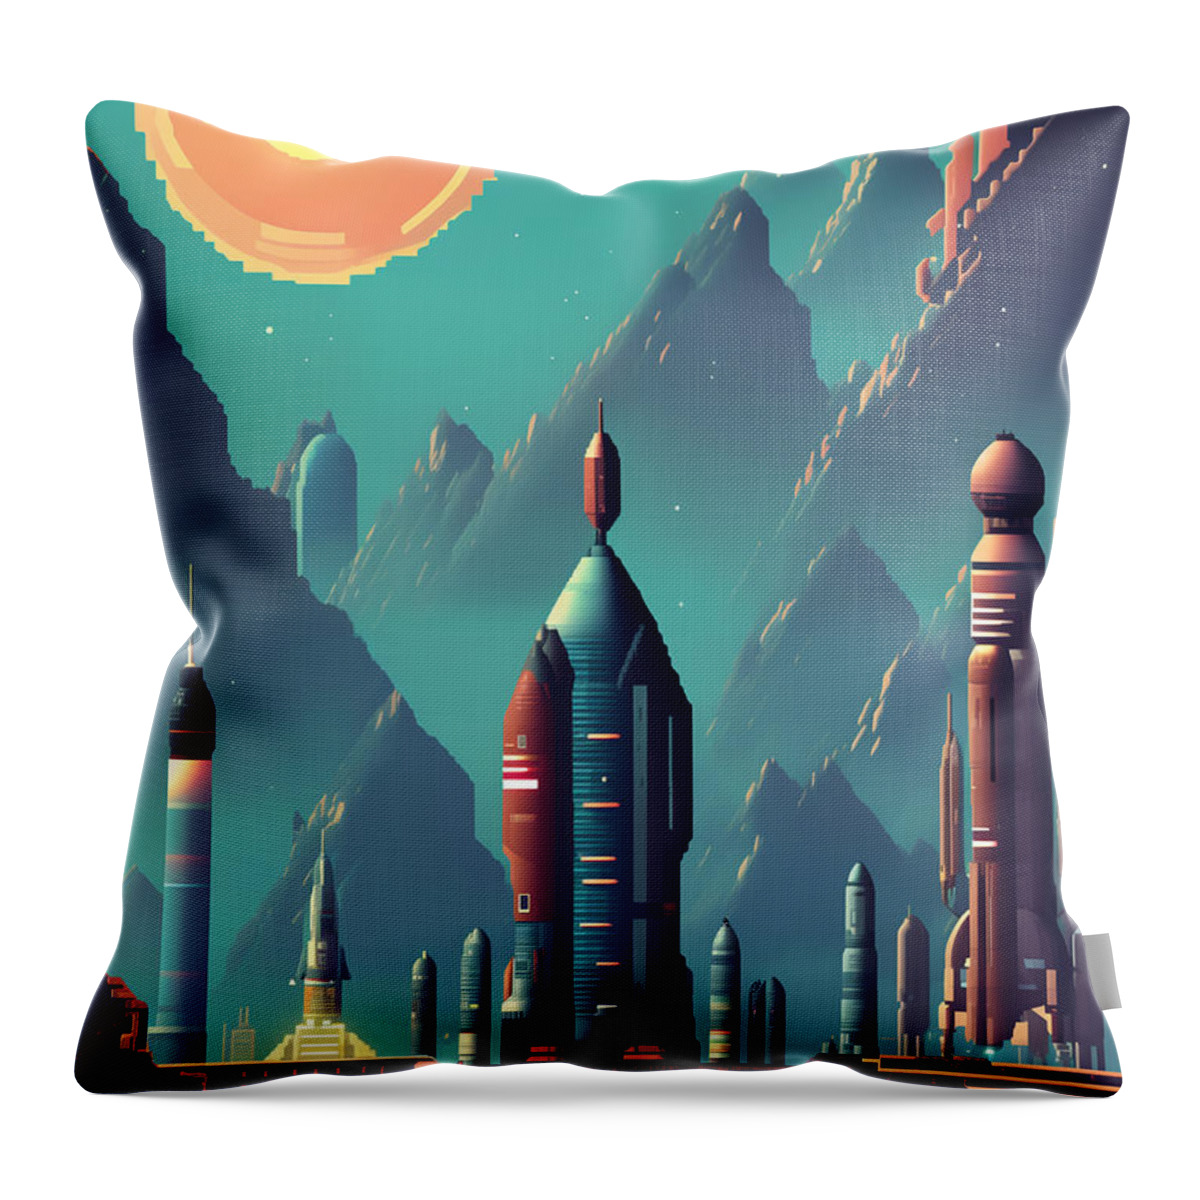 Pixel Throw Pillow featuring the digital art Spaceship #1 by Quik Digicon Art Club